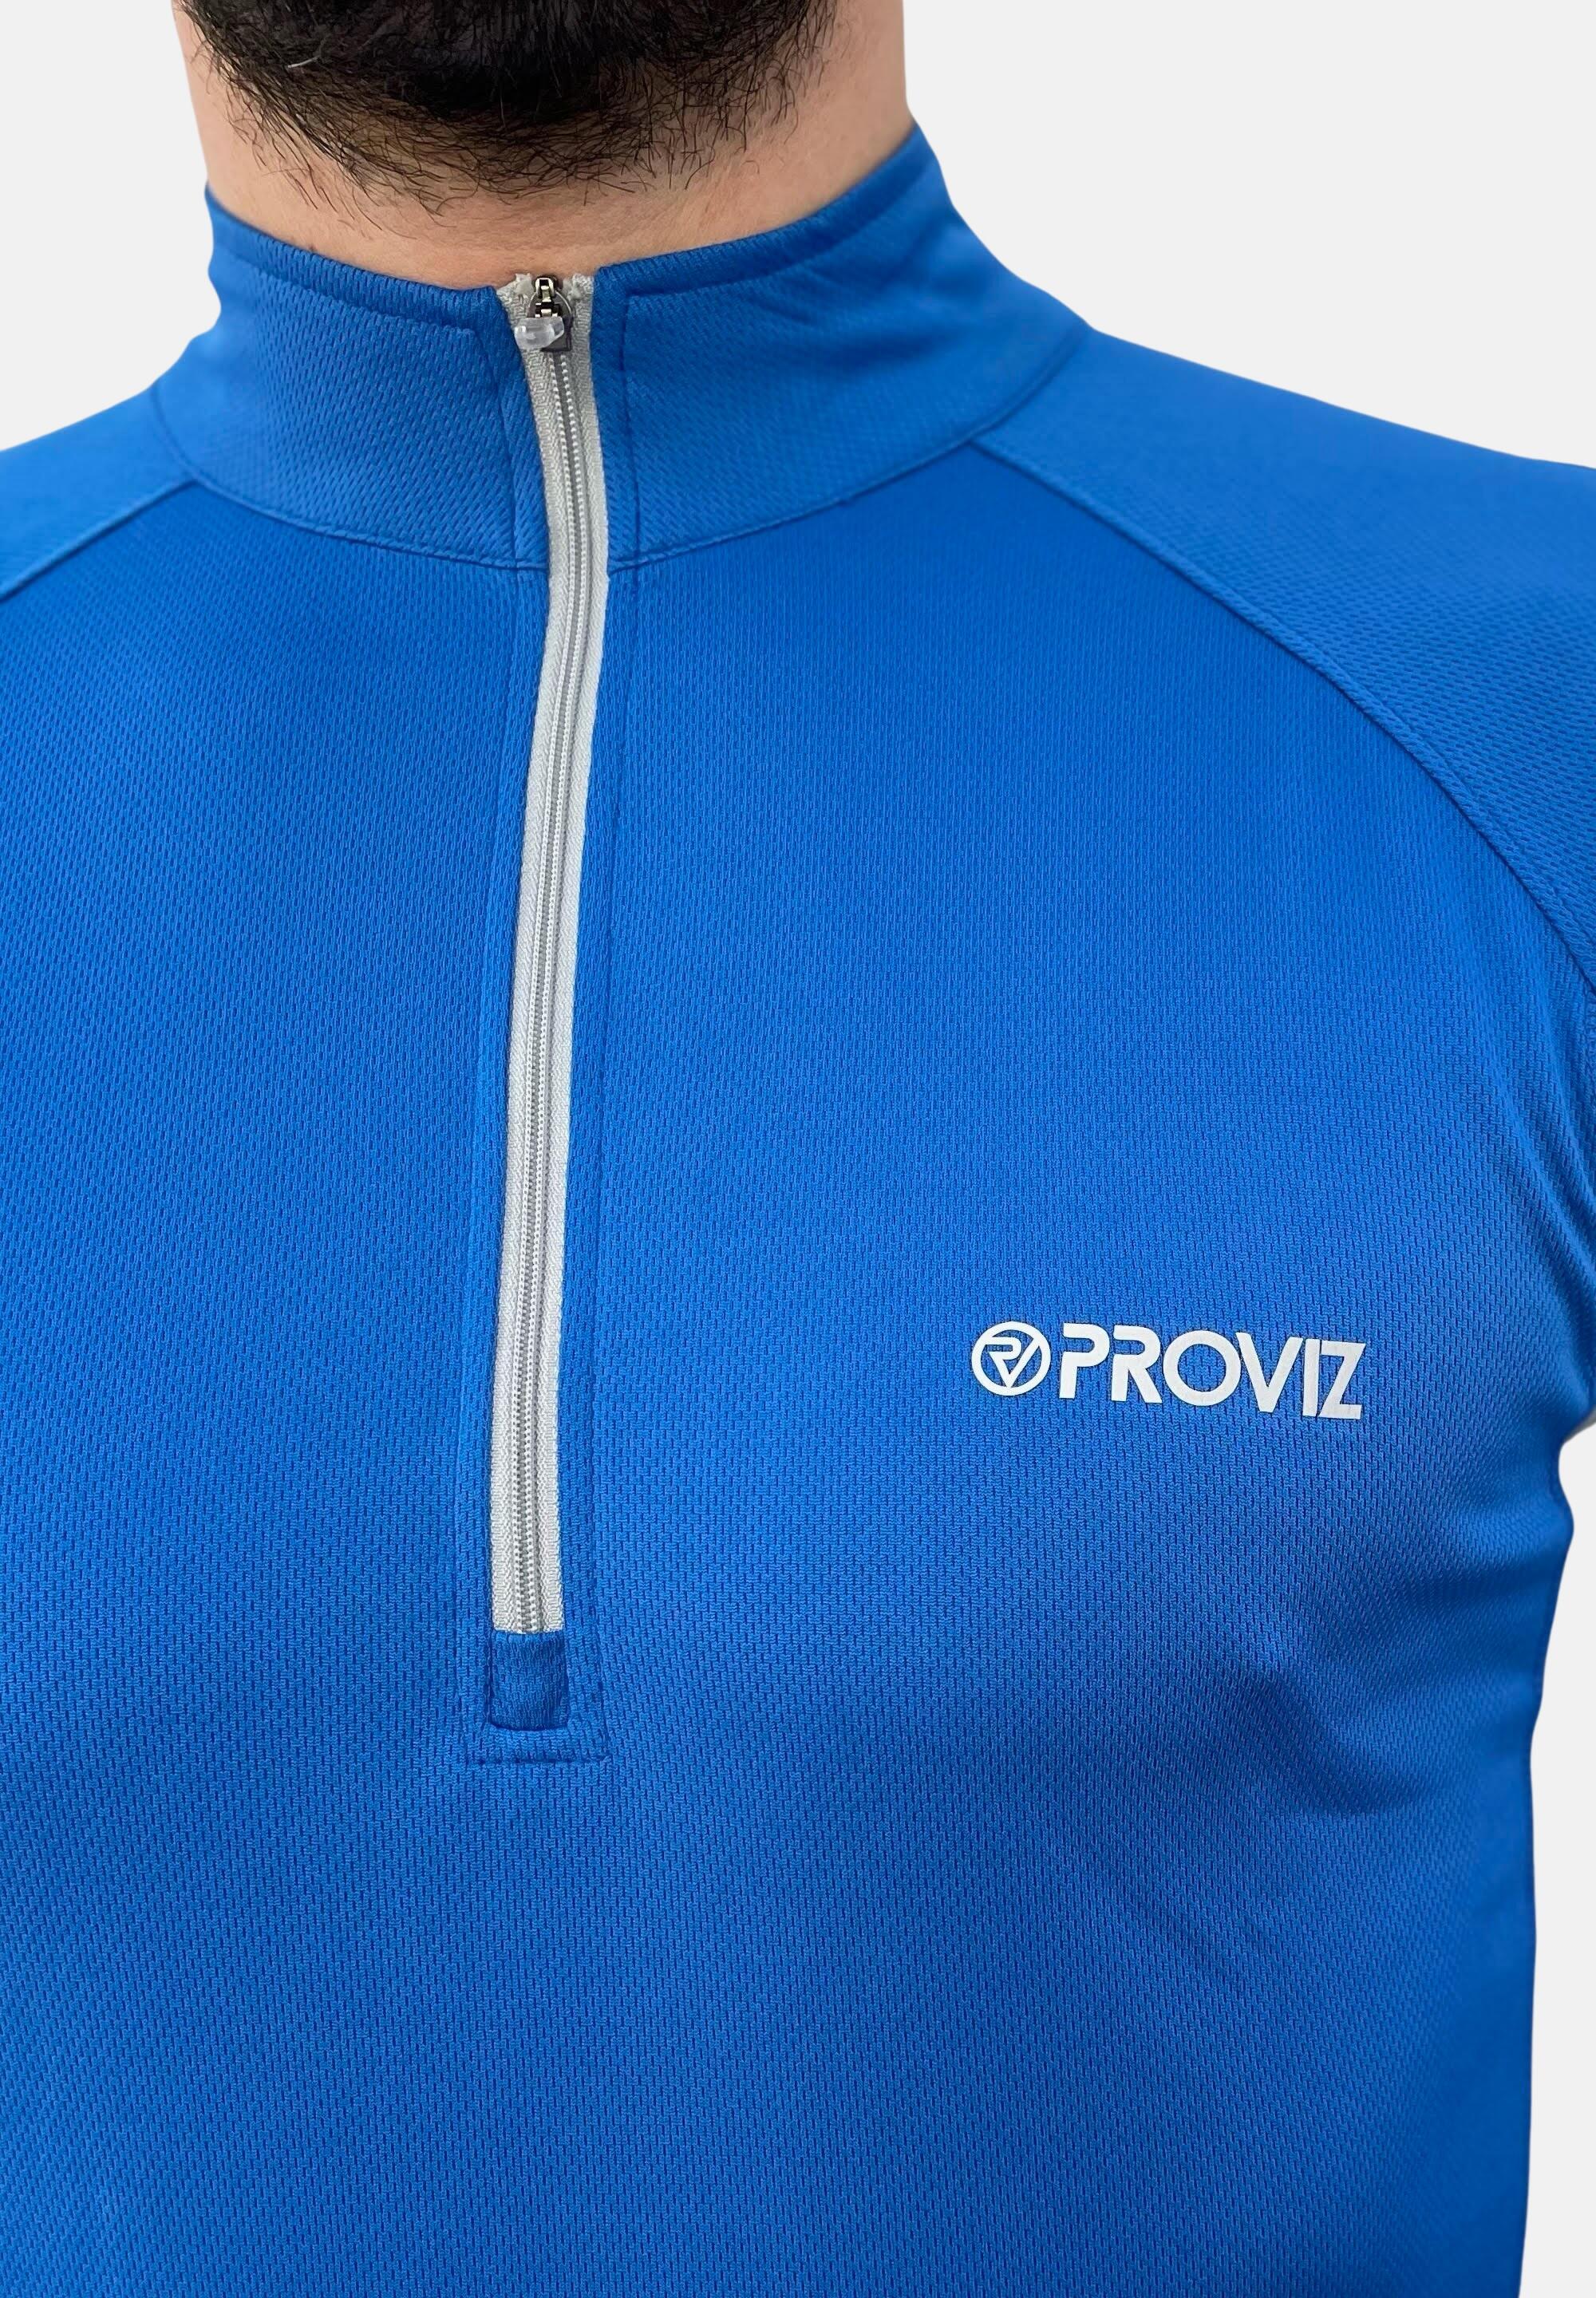 Proviz Classic Mens Sports T-Shirt Long Sleeve Reflective Activewear Top 5/7